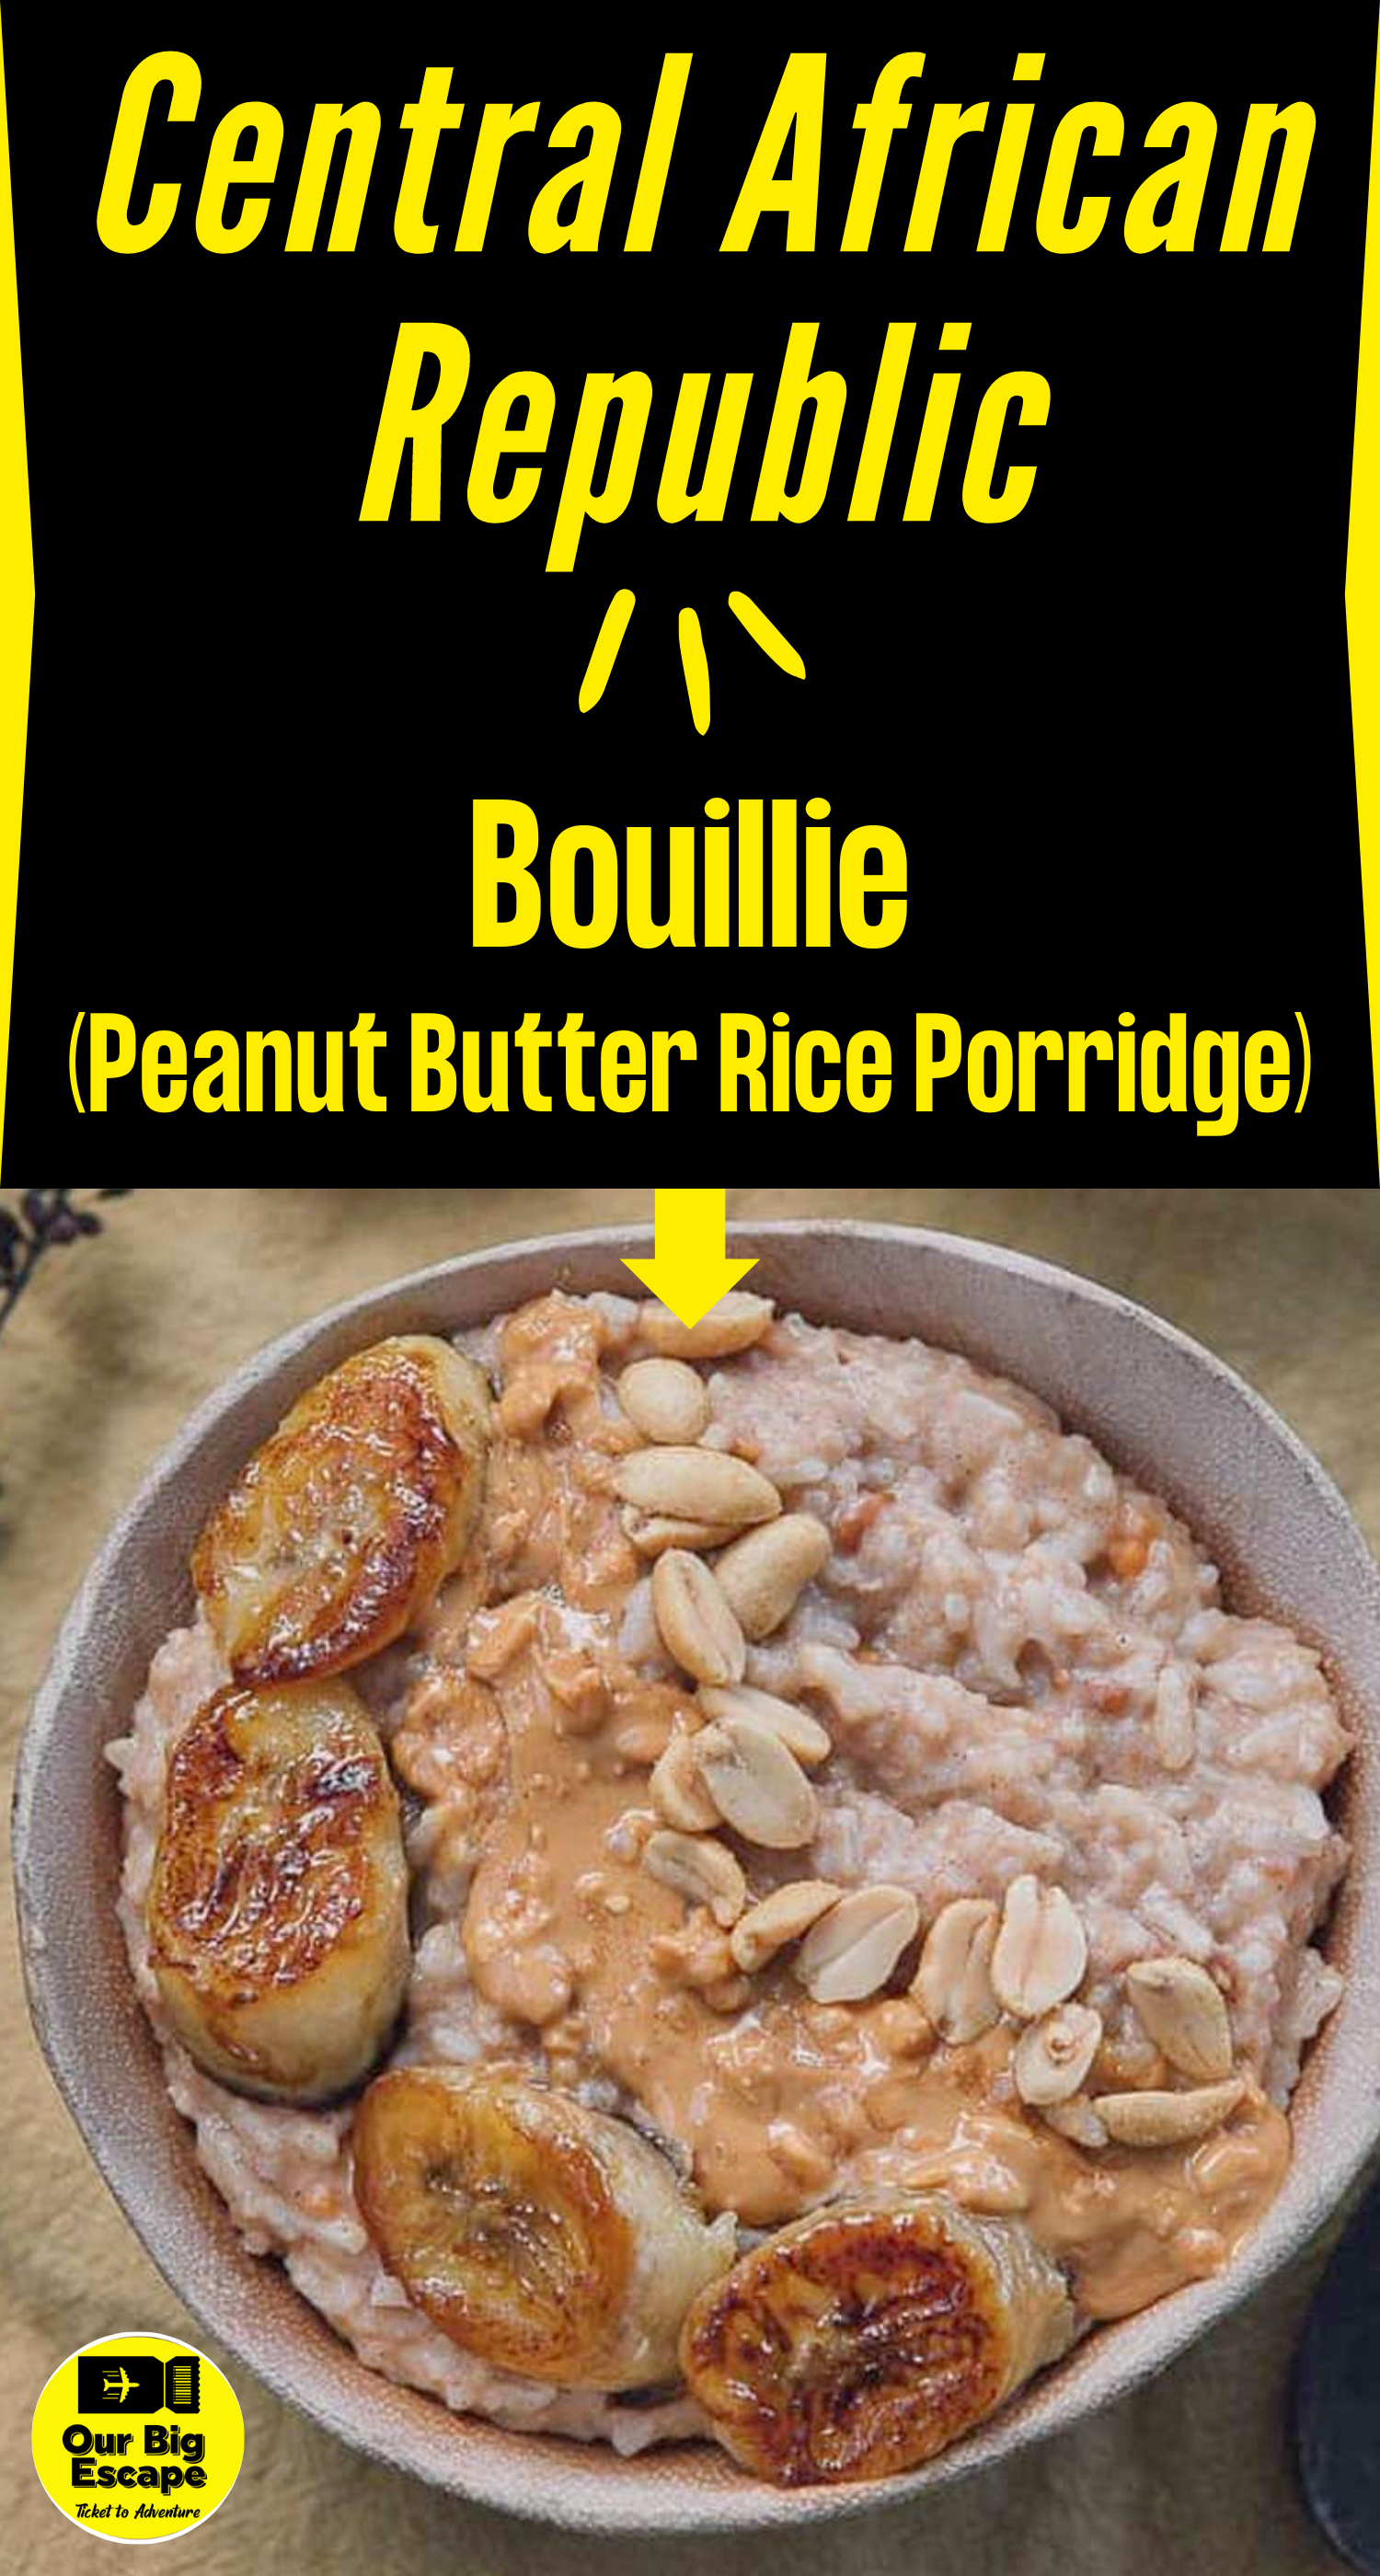 Bouillie (Peanut Butter Rice Porridge) - Central African Republic Recipes